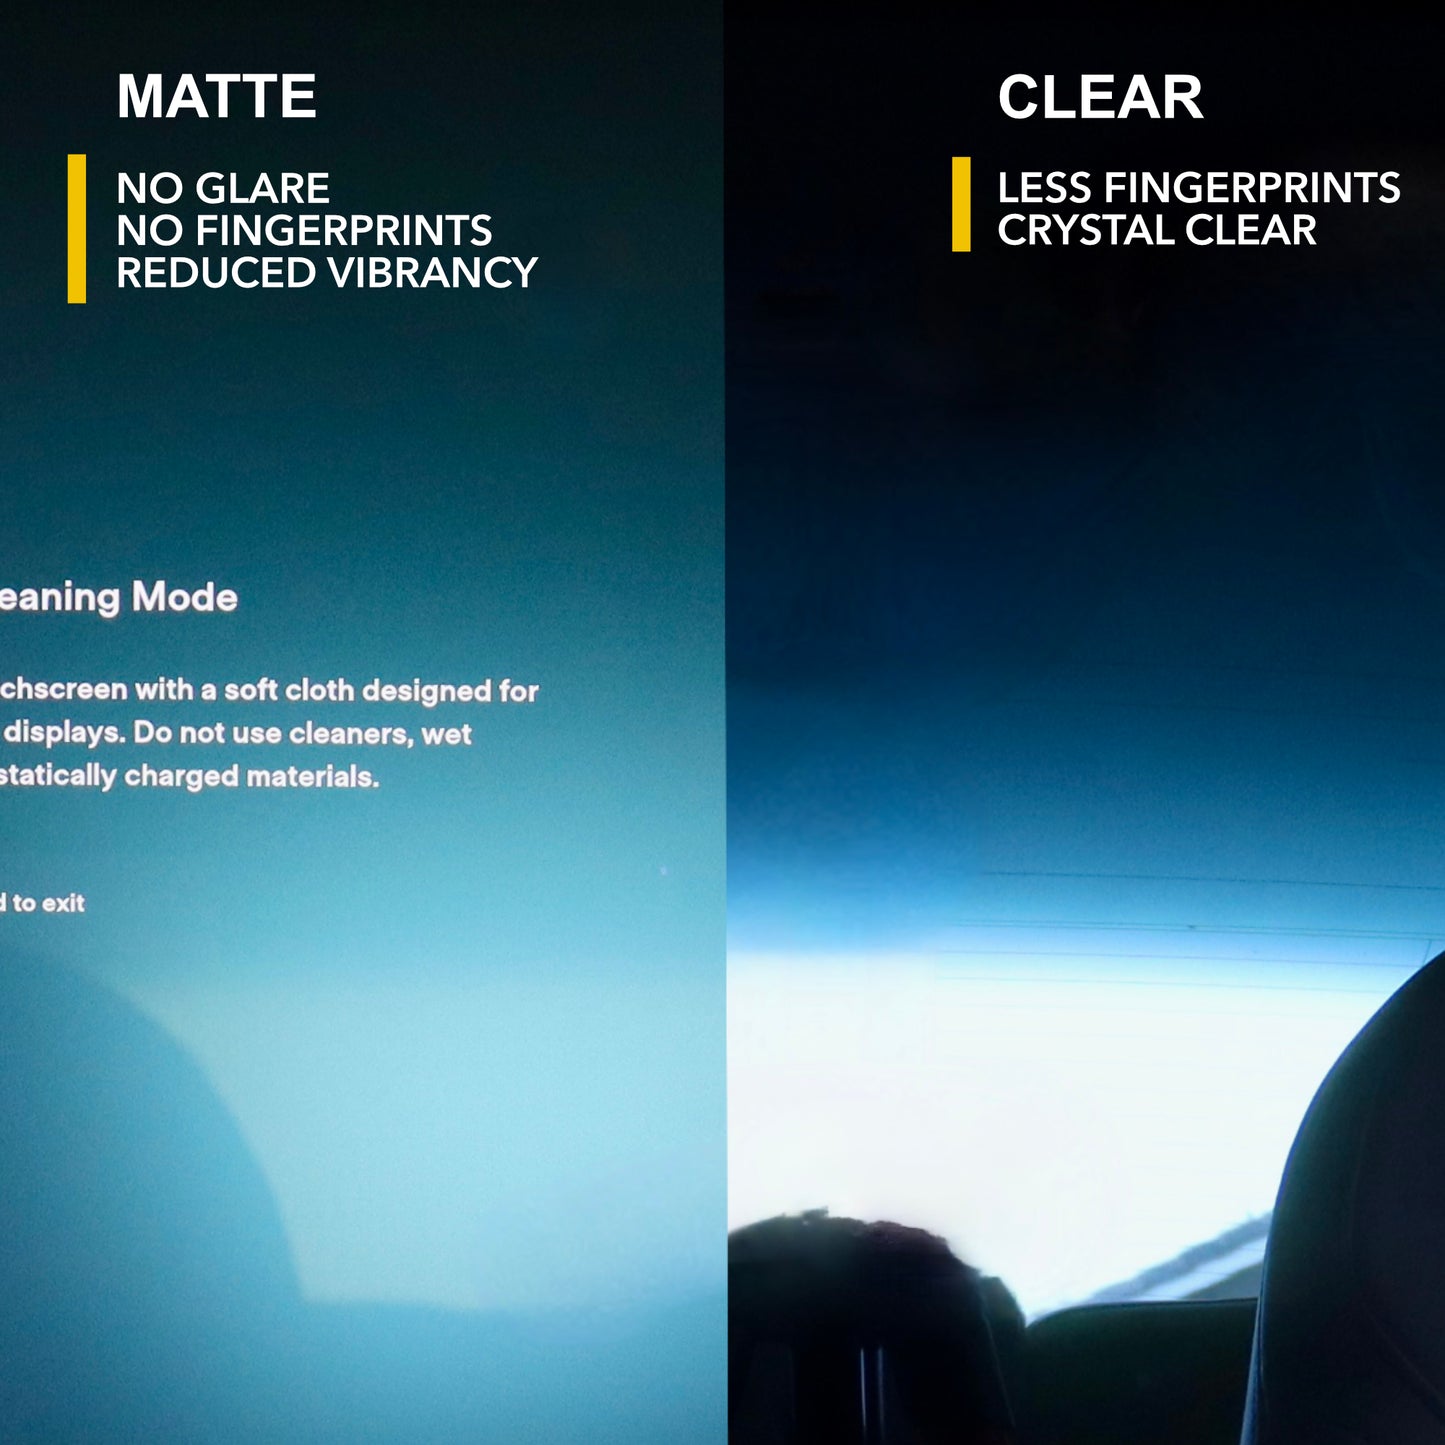 Front & Rear Screen Protectors for Tesla Model X/S 2023+, Clear HD | 9H PET